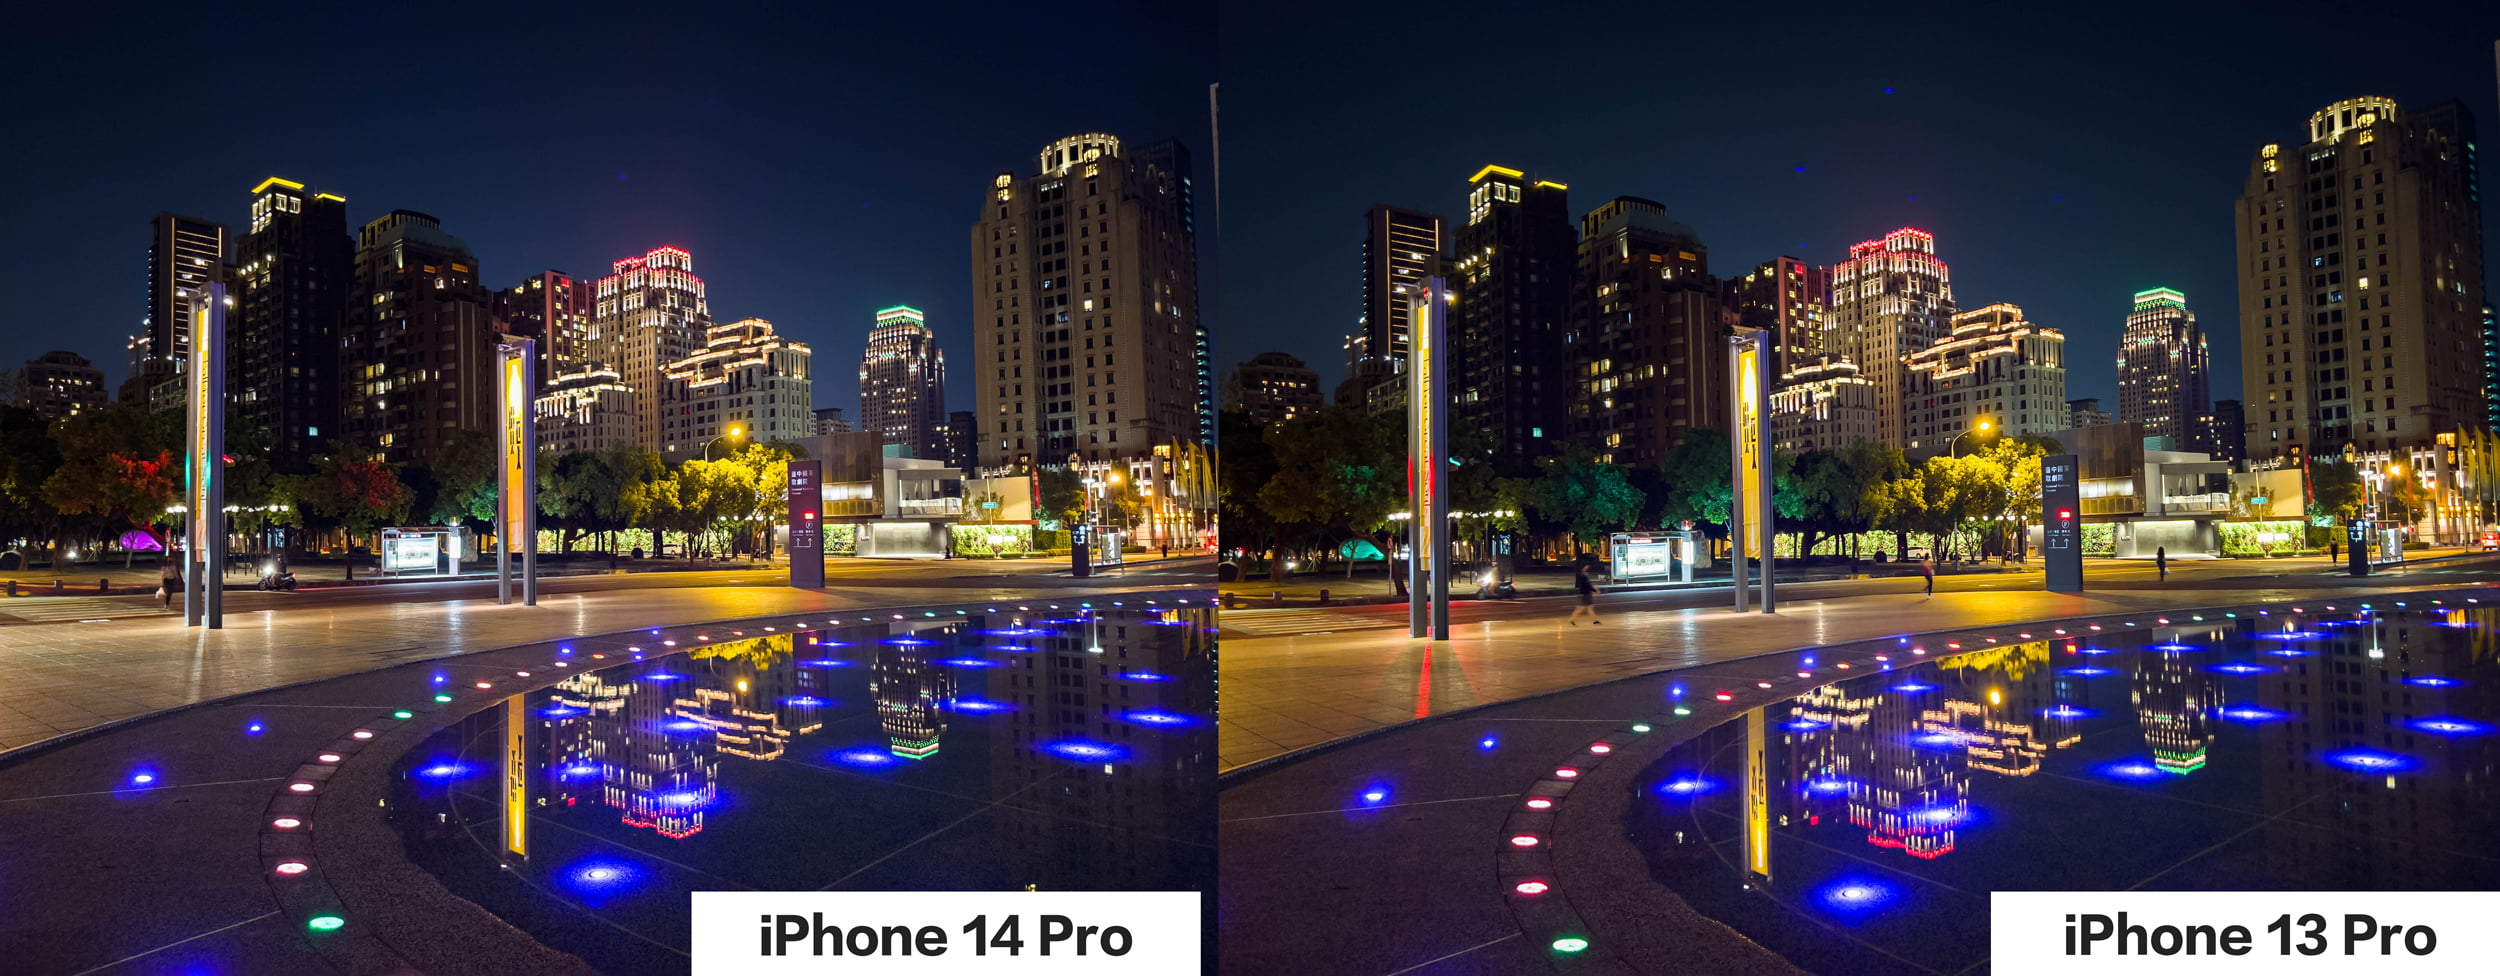 iphone 14 pro night shot comparison 23